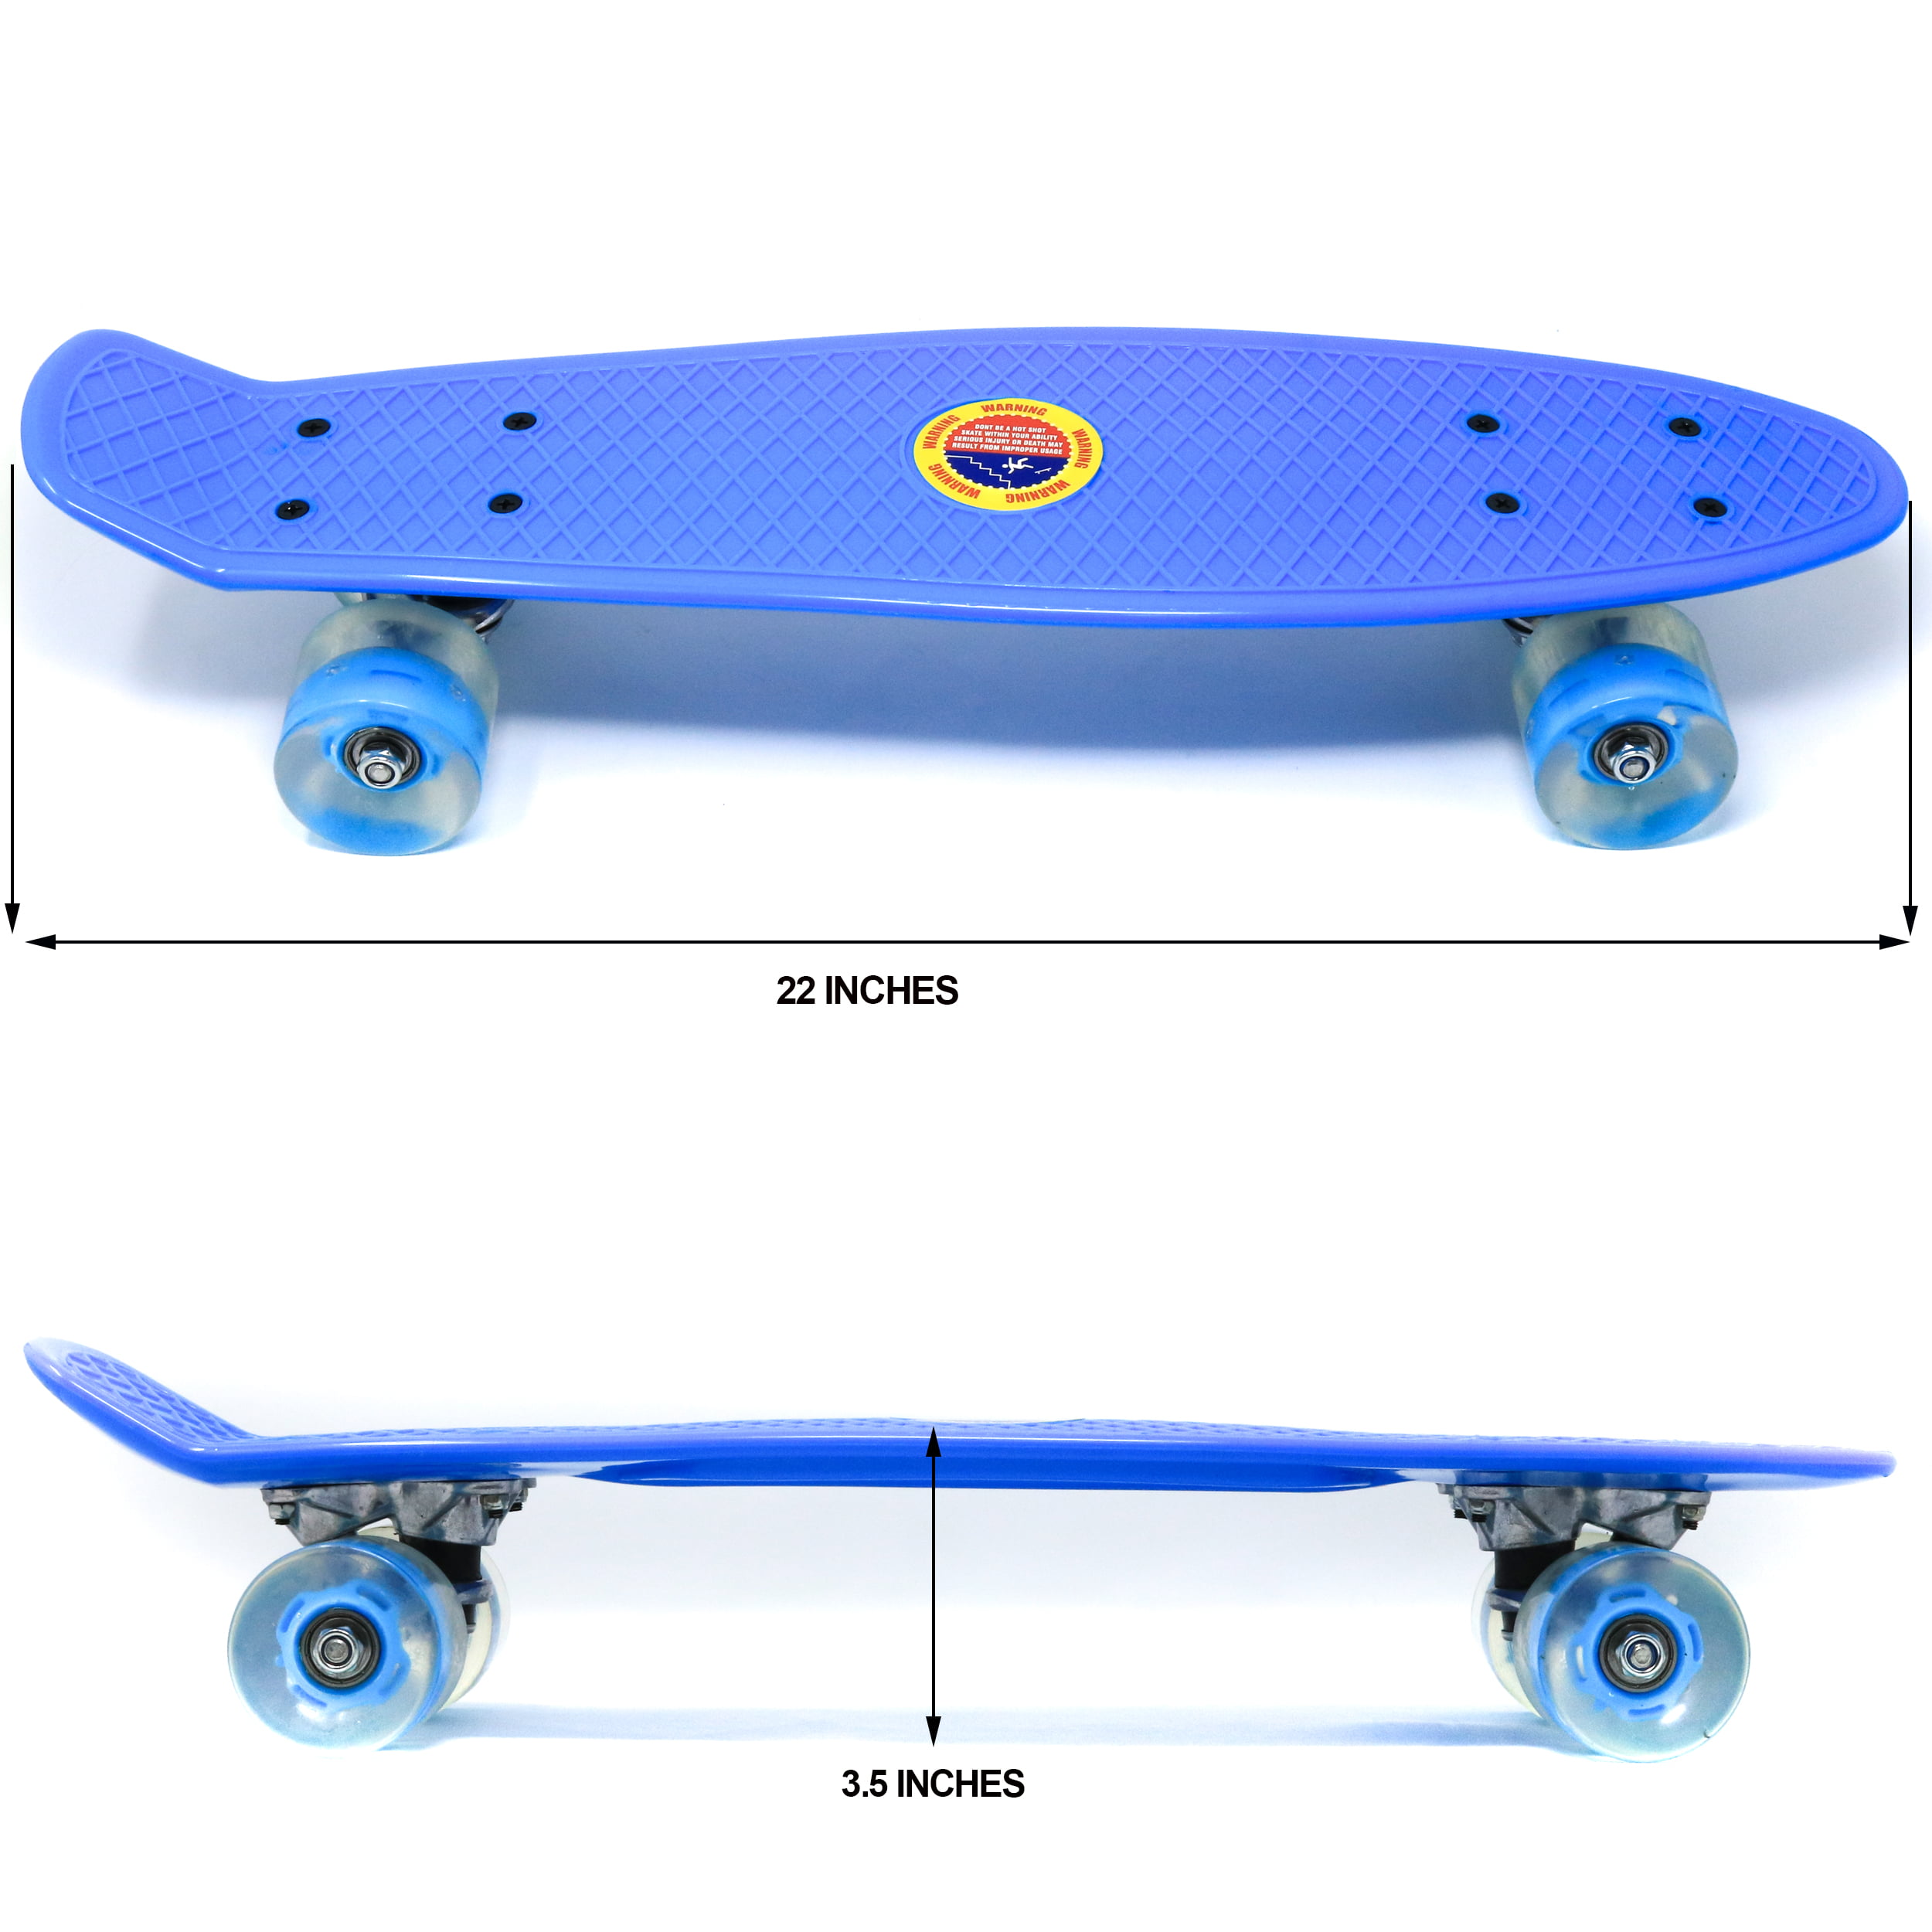 22 Inch Skateboard With Light-Up Wheels, Blue - Walmart.com